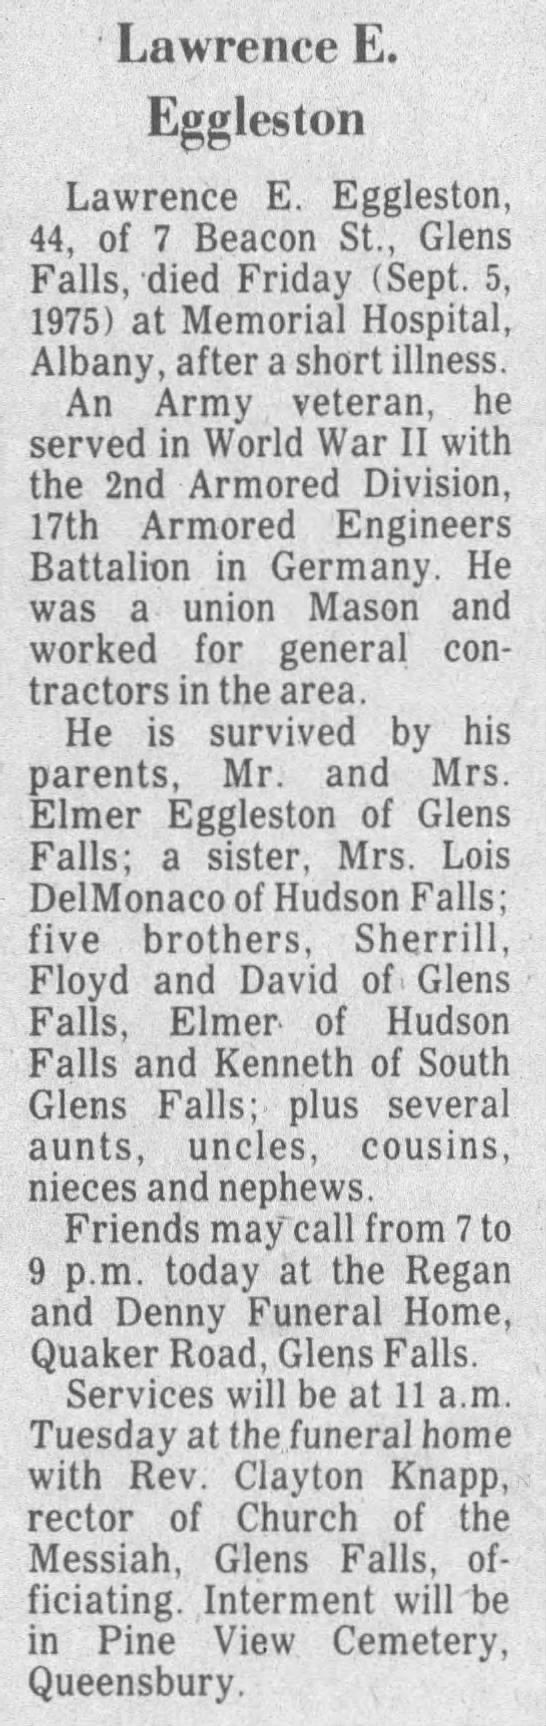 Lawrence E Eggleston - The Post-Star (Glens Falls, Warren, New York, United States of America) · 8 Sep 1975,